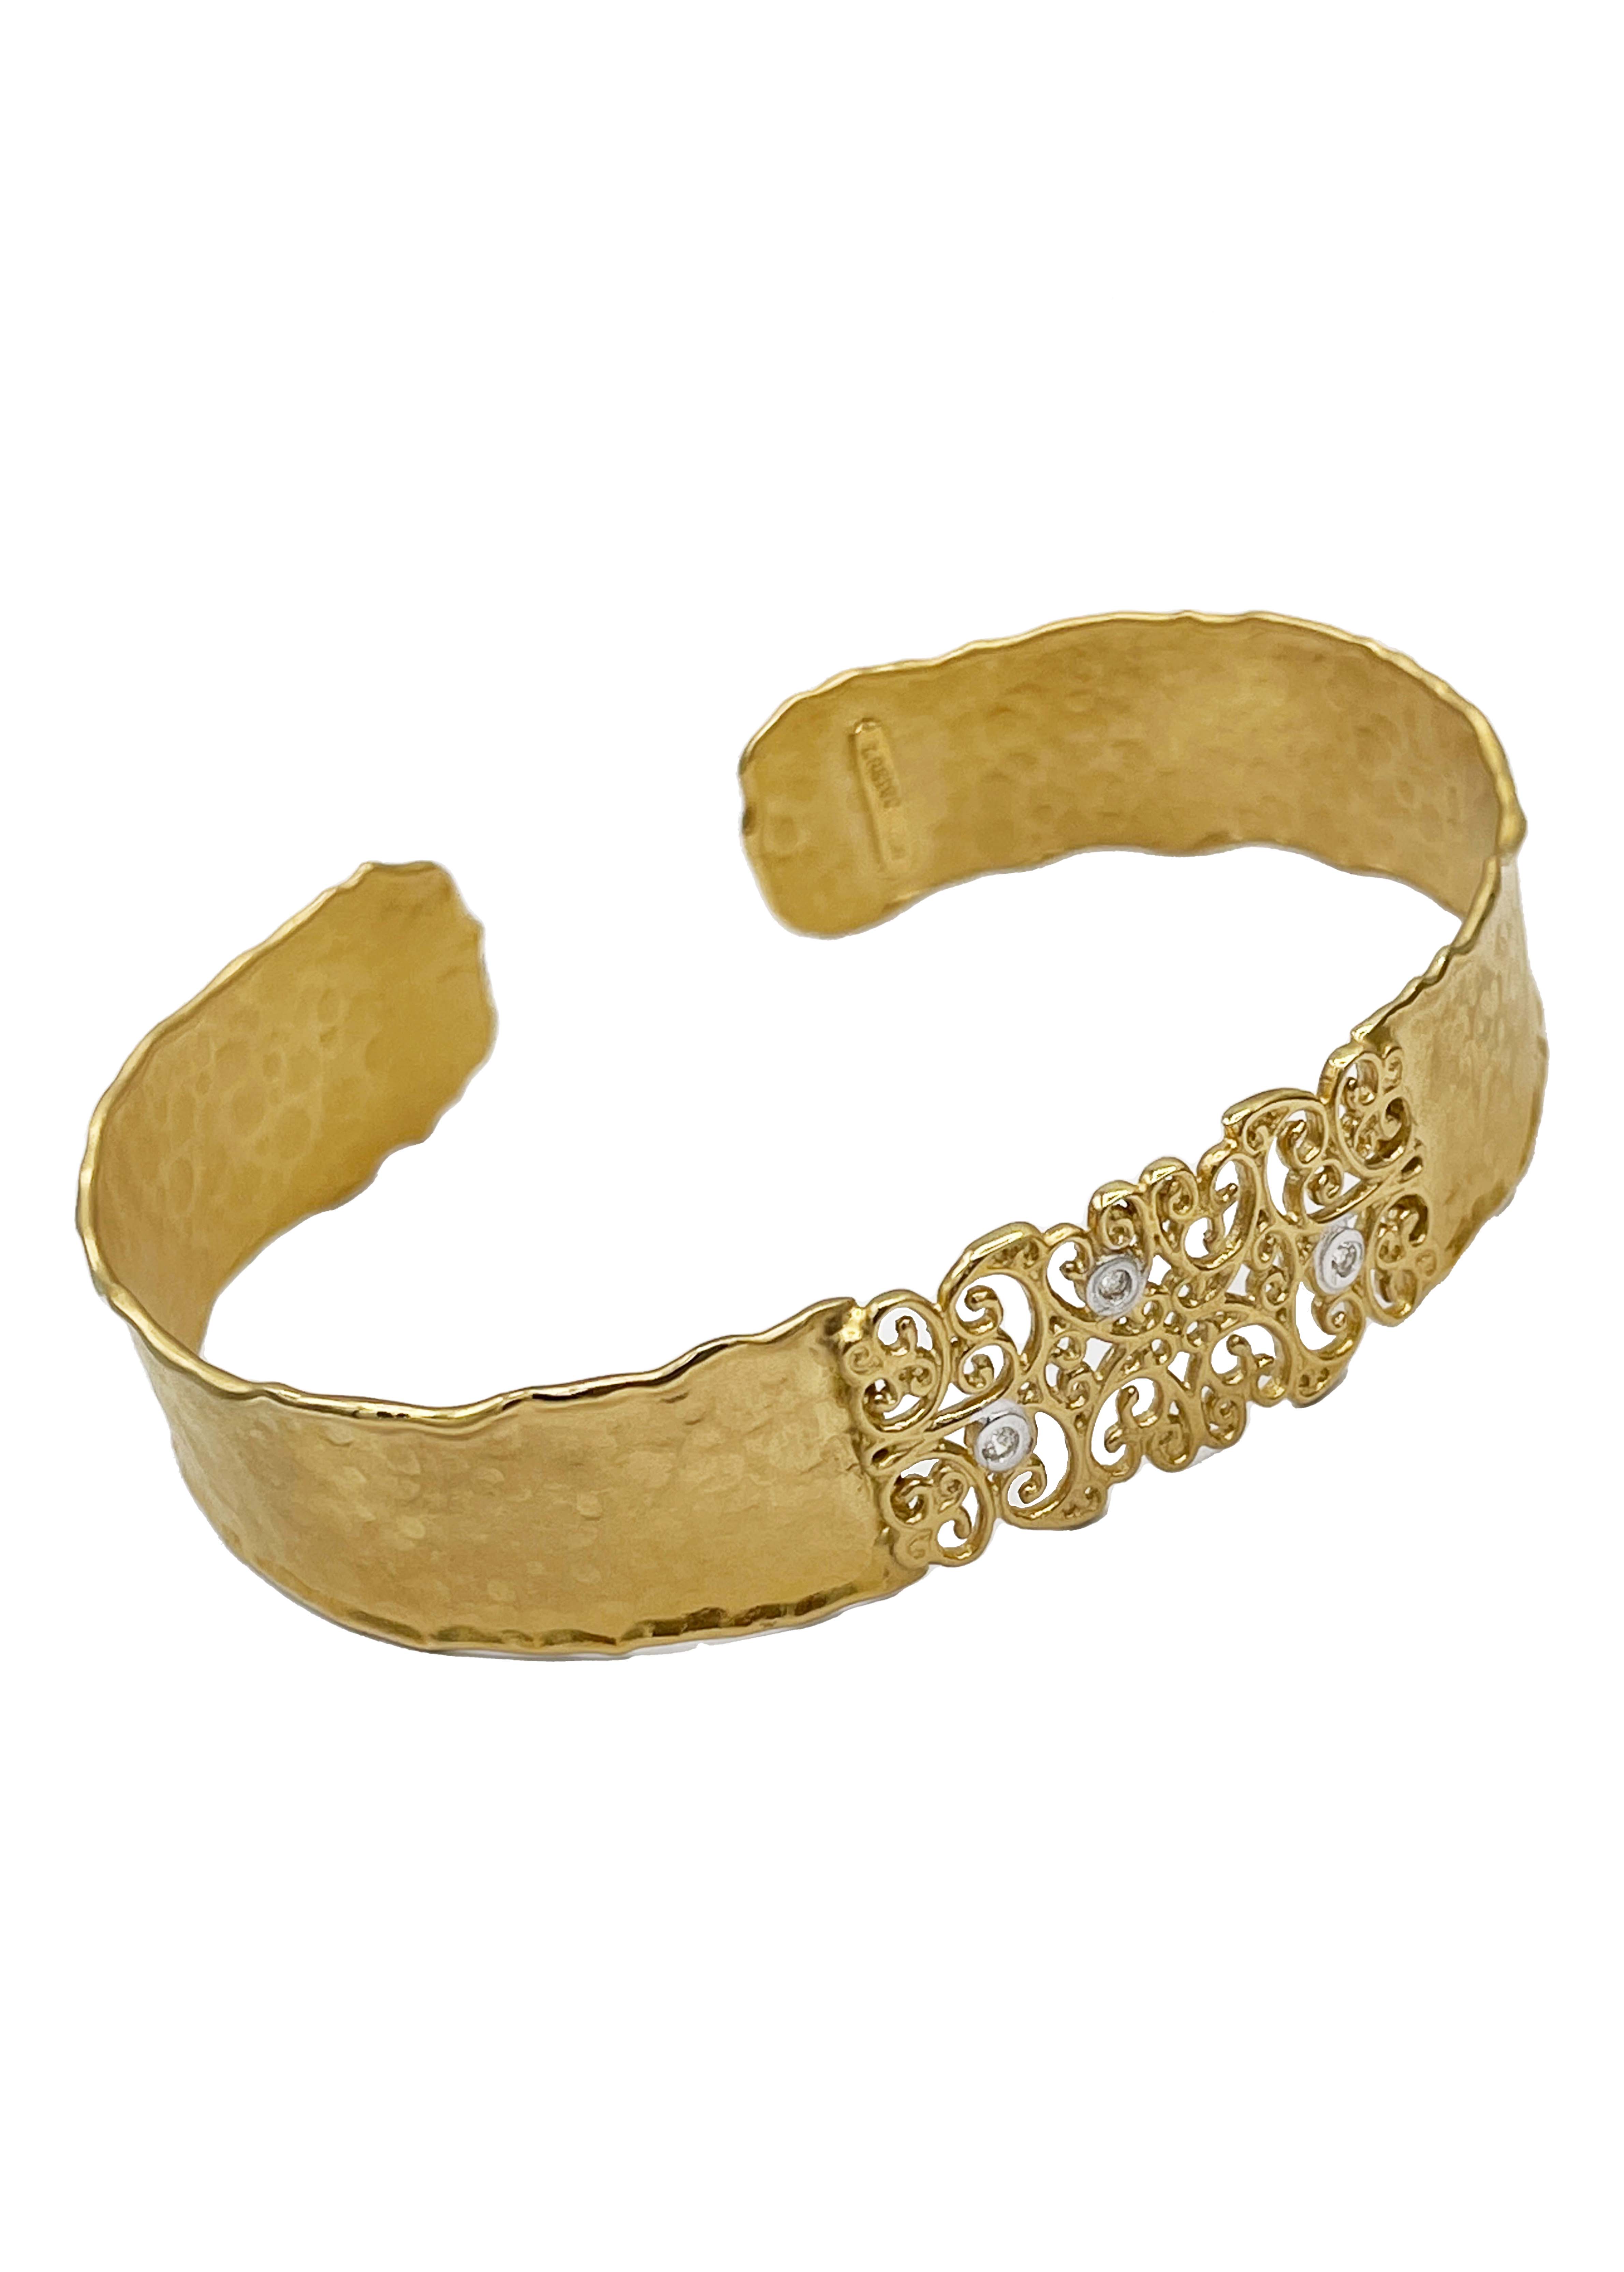 I. Reiss 14k Yellow Gold Filigree Cuff Bracelet with Diamonds Image